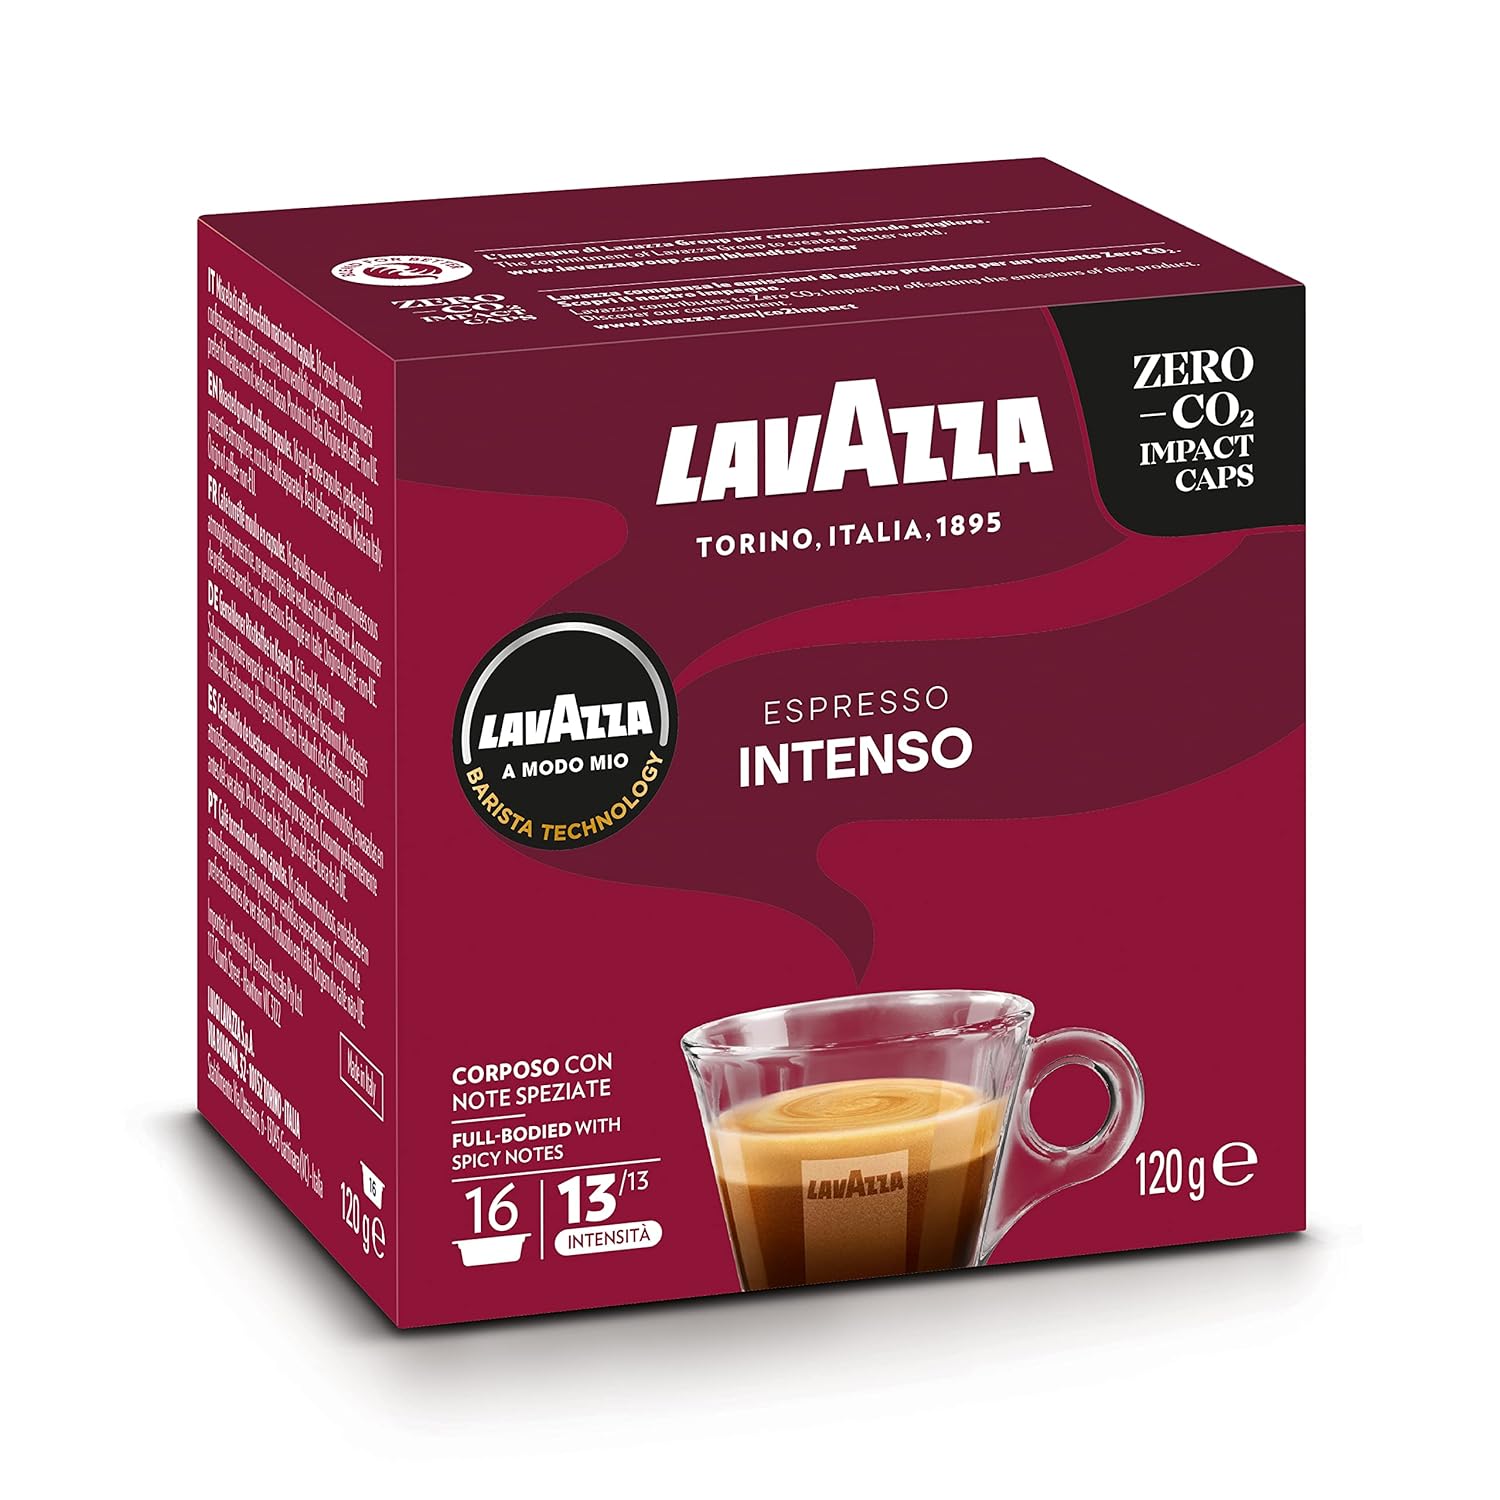 Lavazza, A Modo Mio Espresso Intenso, Coffee Capsules, Ideal for Latte, Spicy Notes, Arabica & Robusta, Intensity 13/13, Medium Dark Roast, 1 Pack of 16 Espresso Capsules